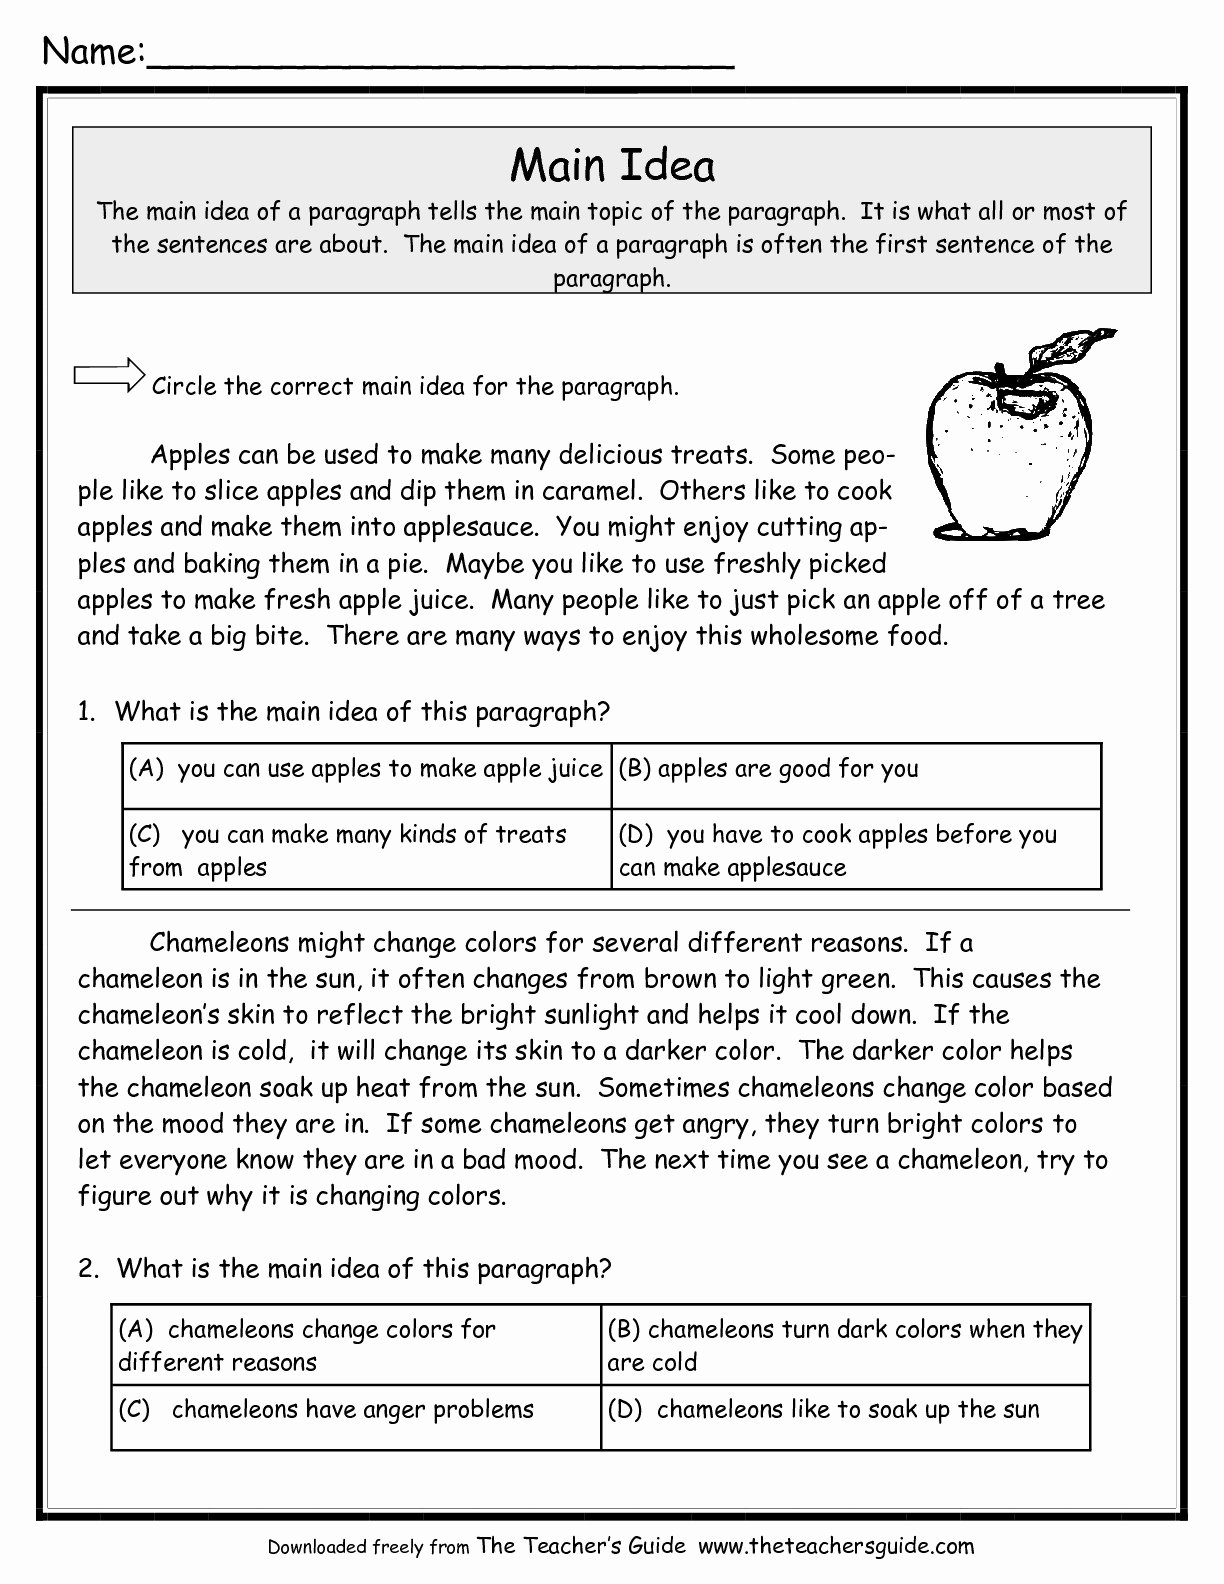 Main Idea Worksheet 2nd Grade Elegant Main Idea Worksheets From the Teacher S Guide